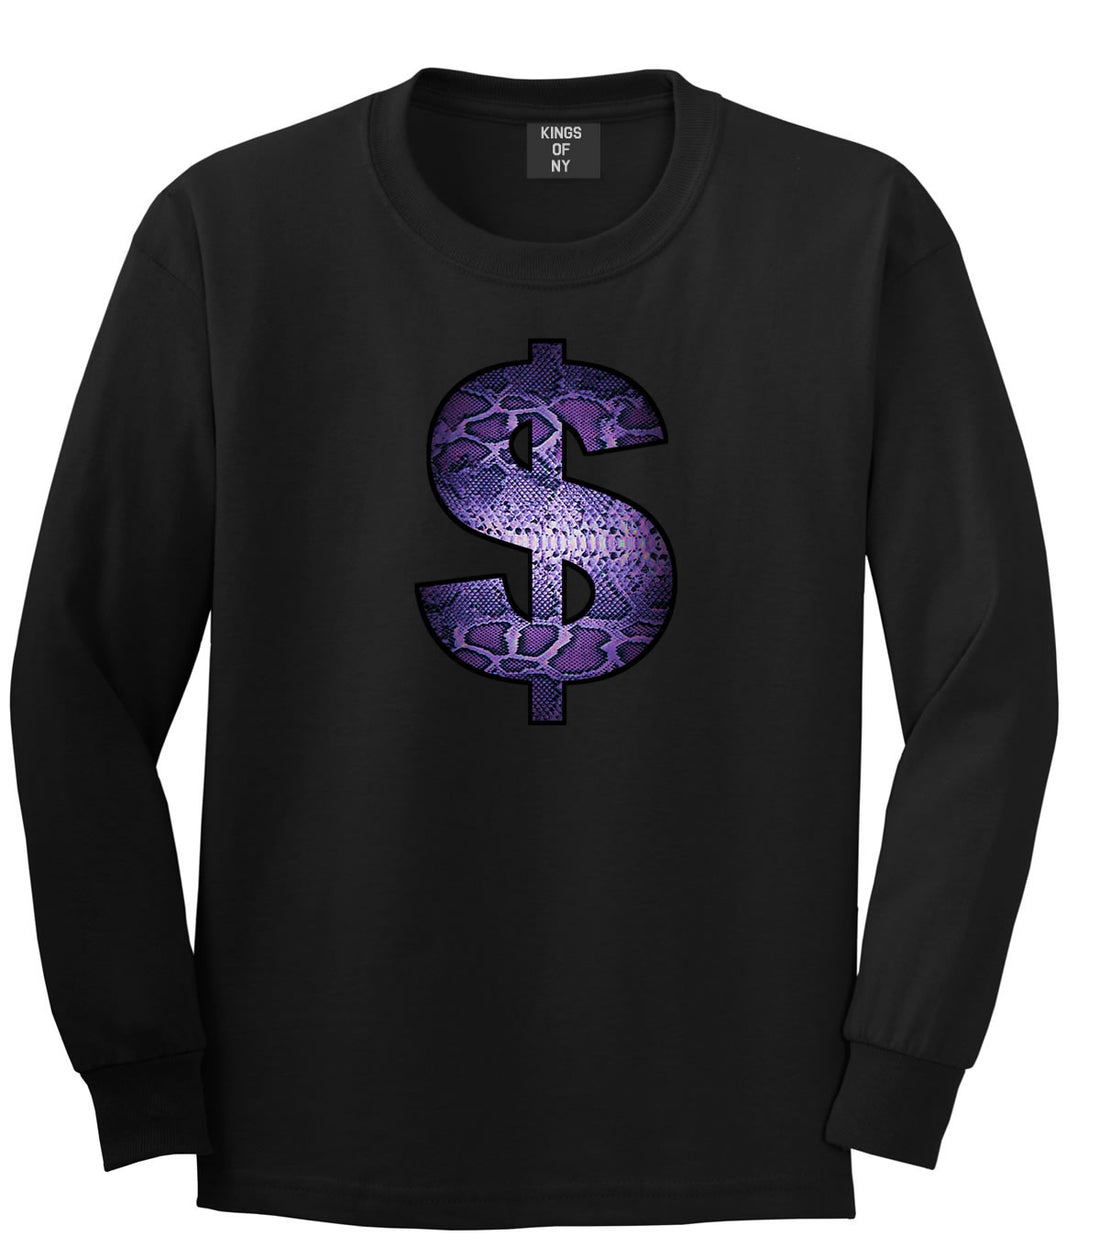 Snakeskin Money Sign Purple Animal Print Long Sleeve Boys Kids T-Shirt In Black by Kings Of NY